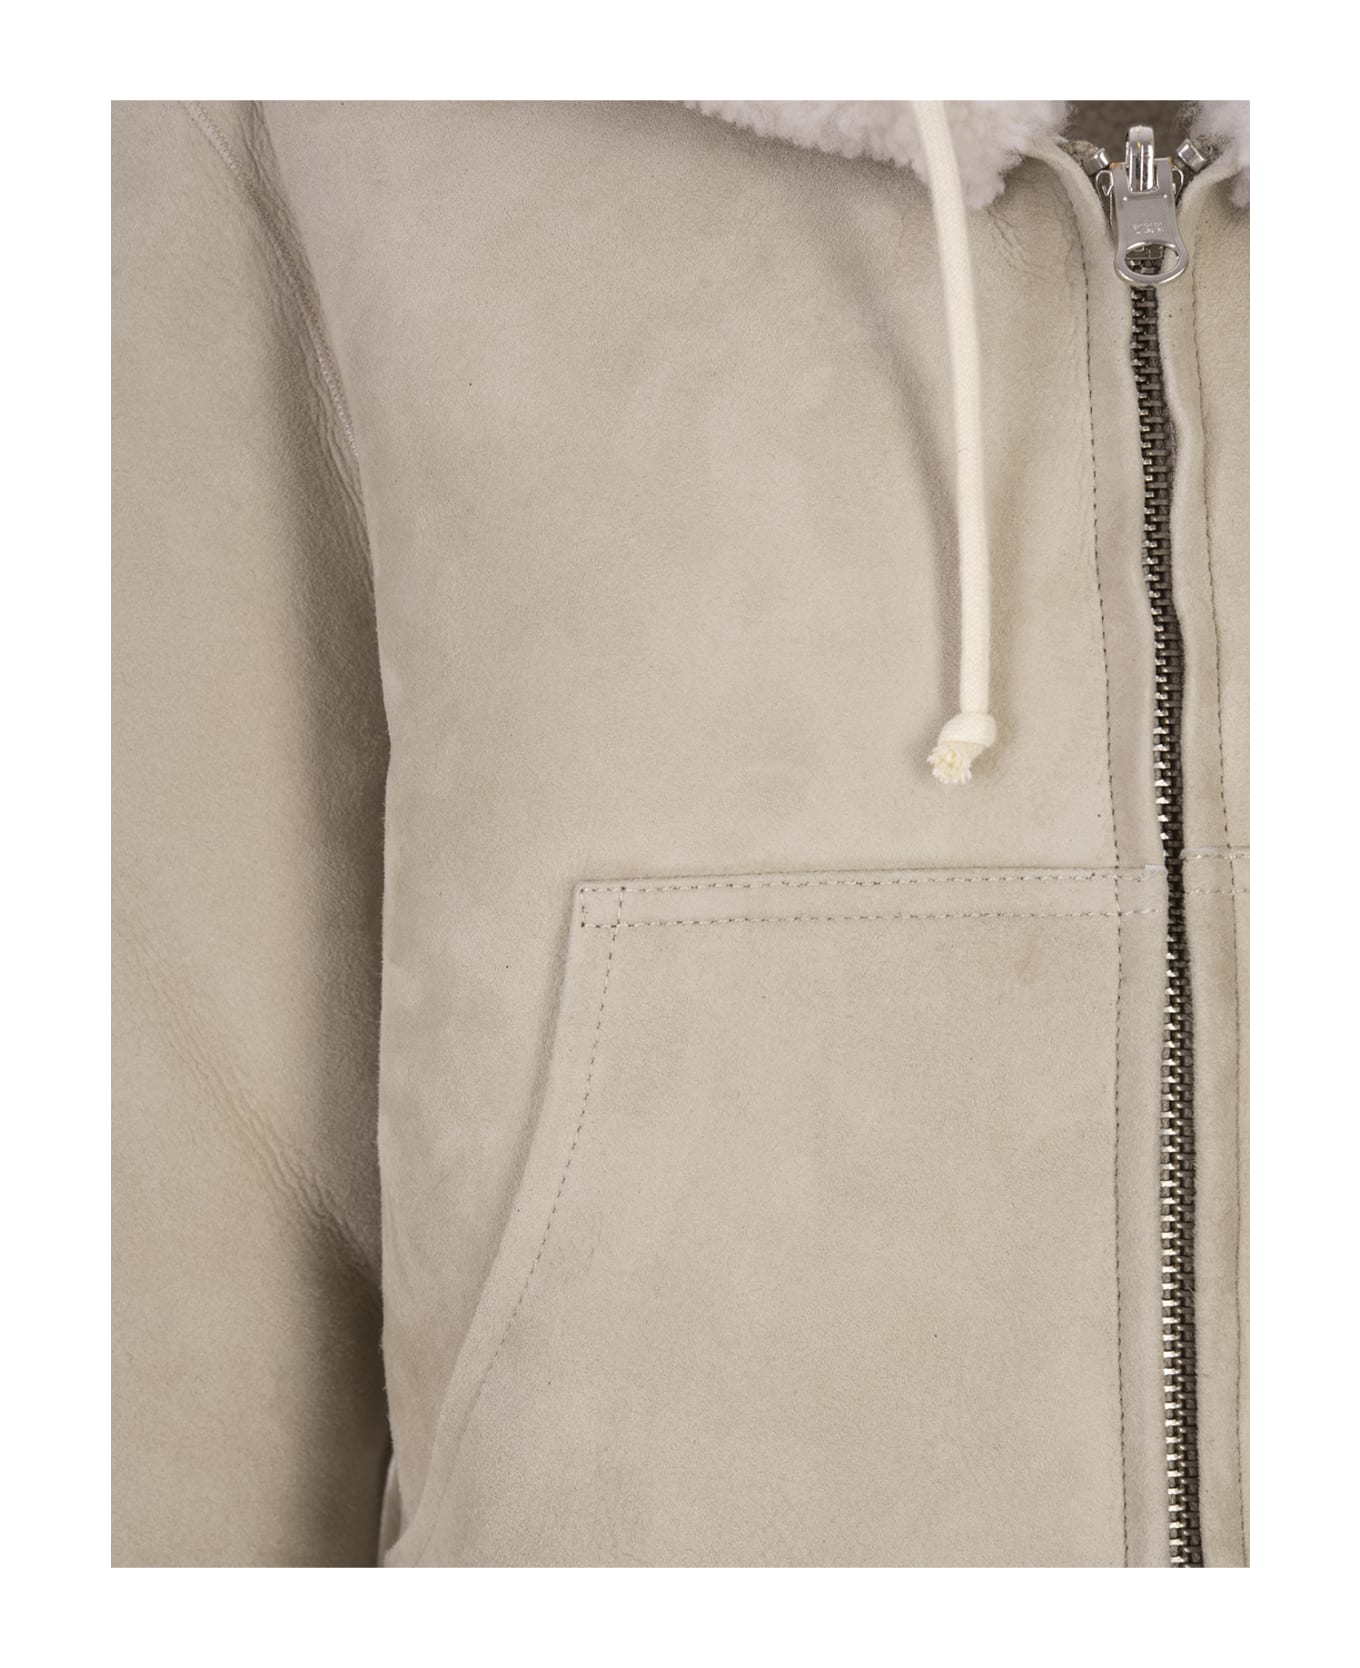 ANDREĀDAMO Short Reversible Jacket In Taupe Shearling - Marrone